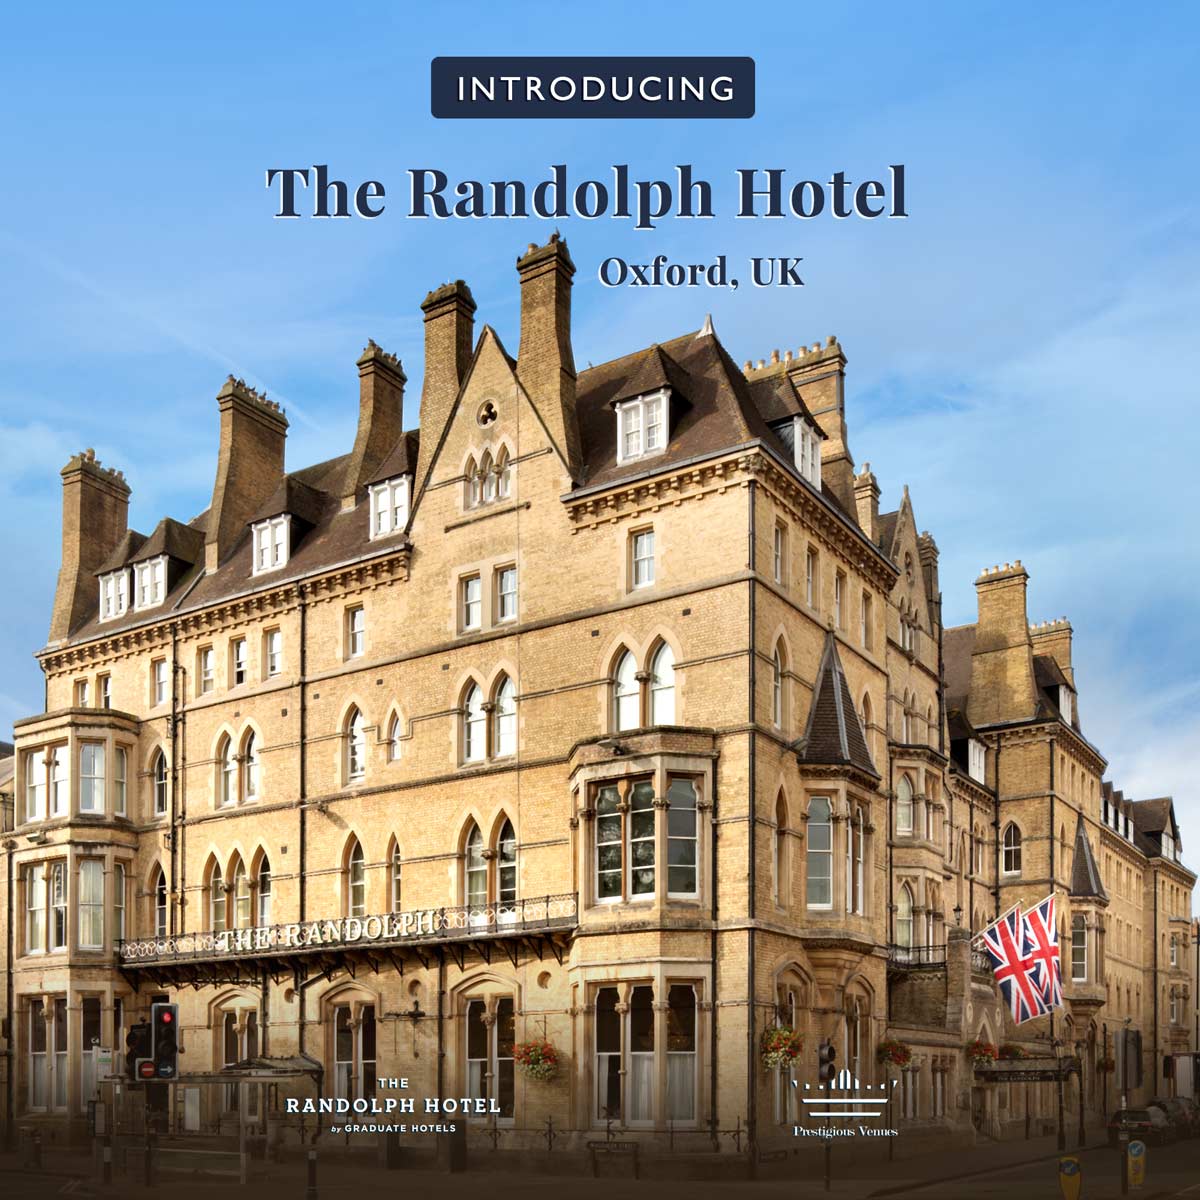 The Randolph Hotel, Oxford